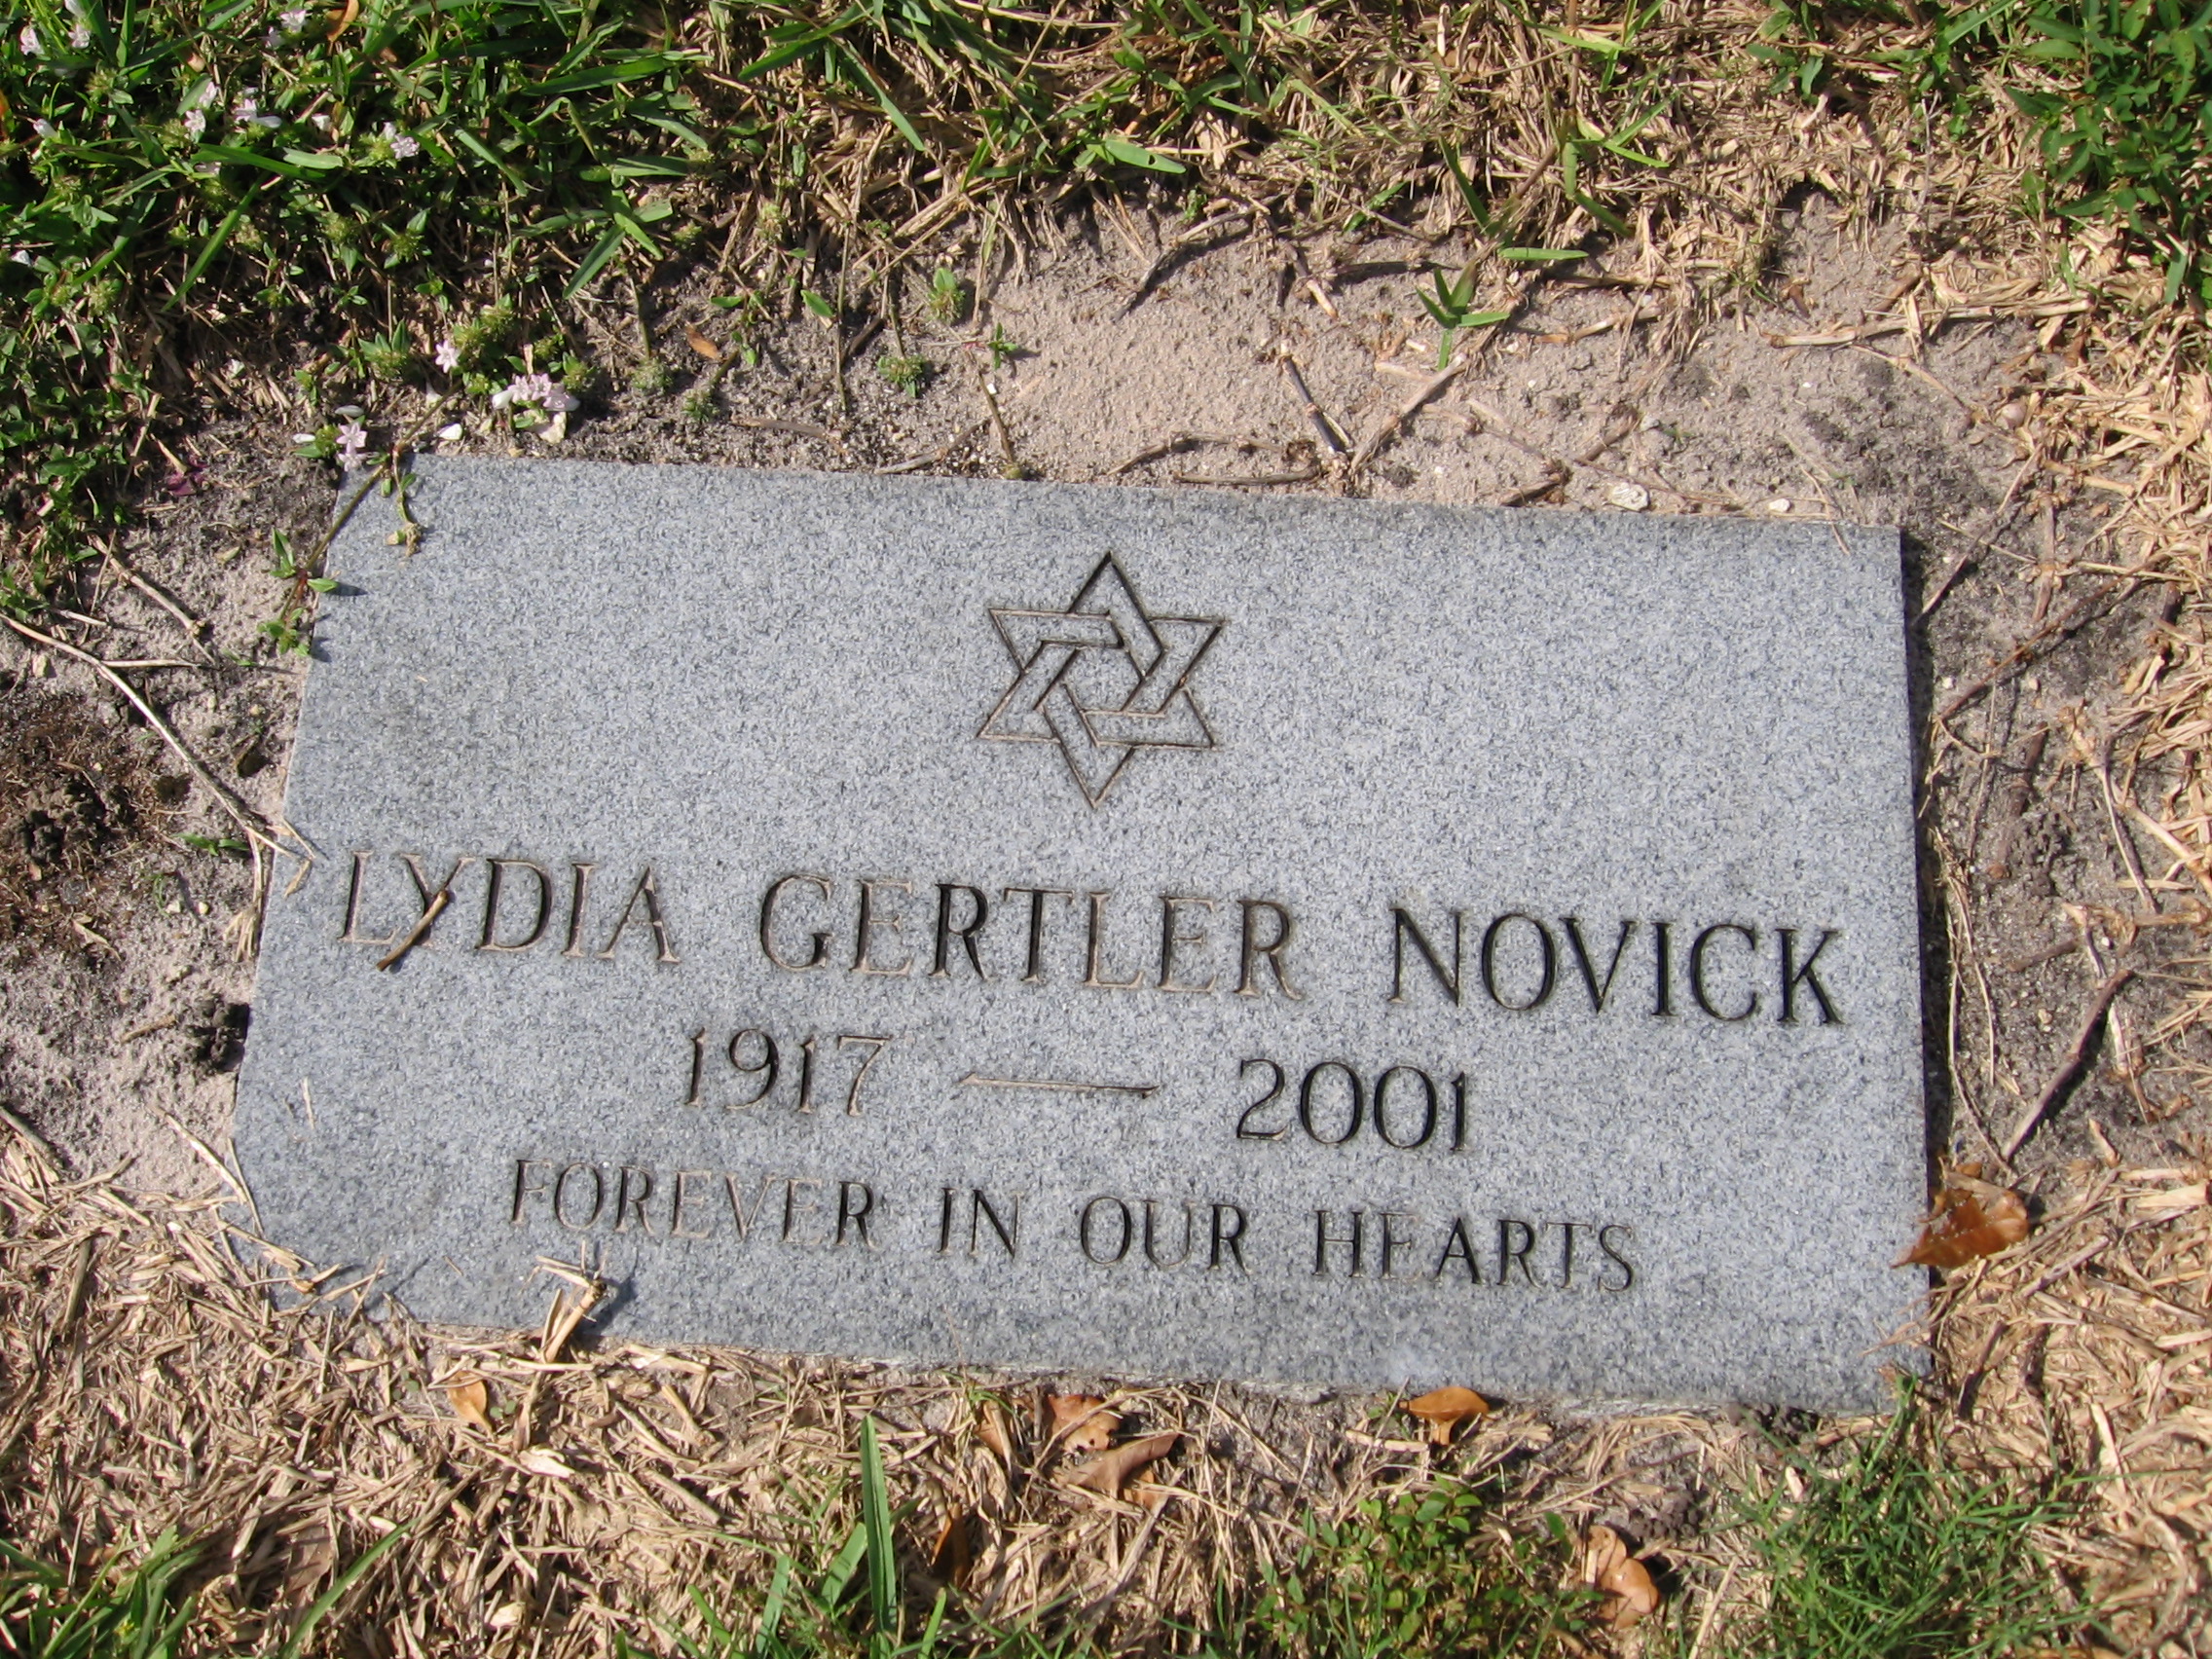 Lydia Gertler Novick